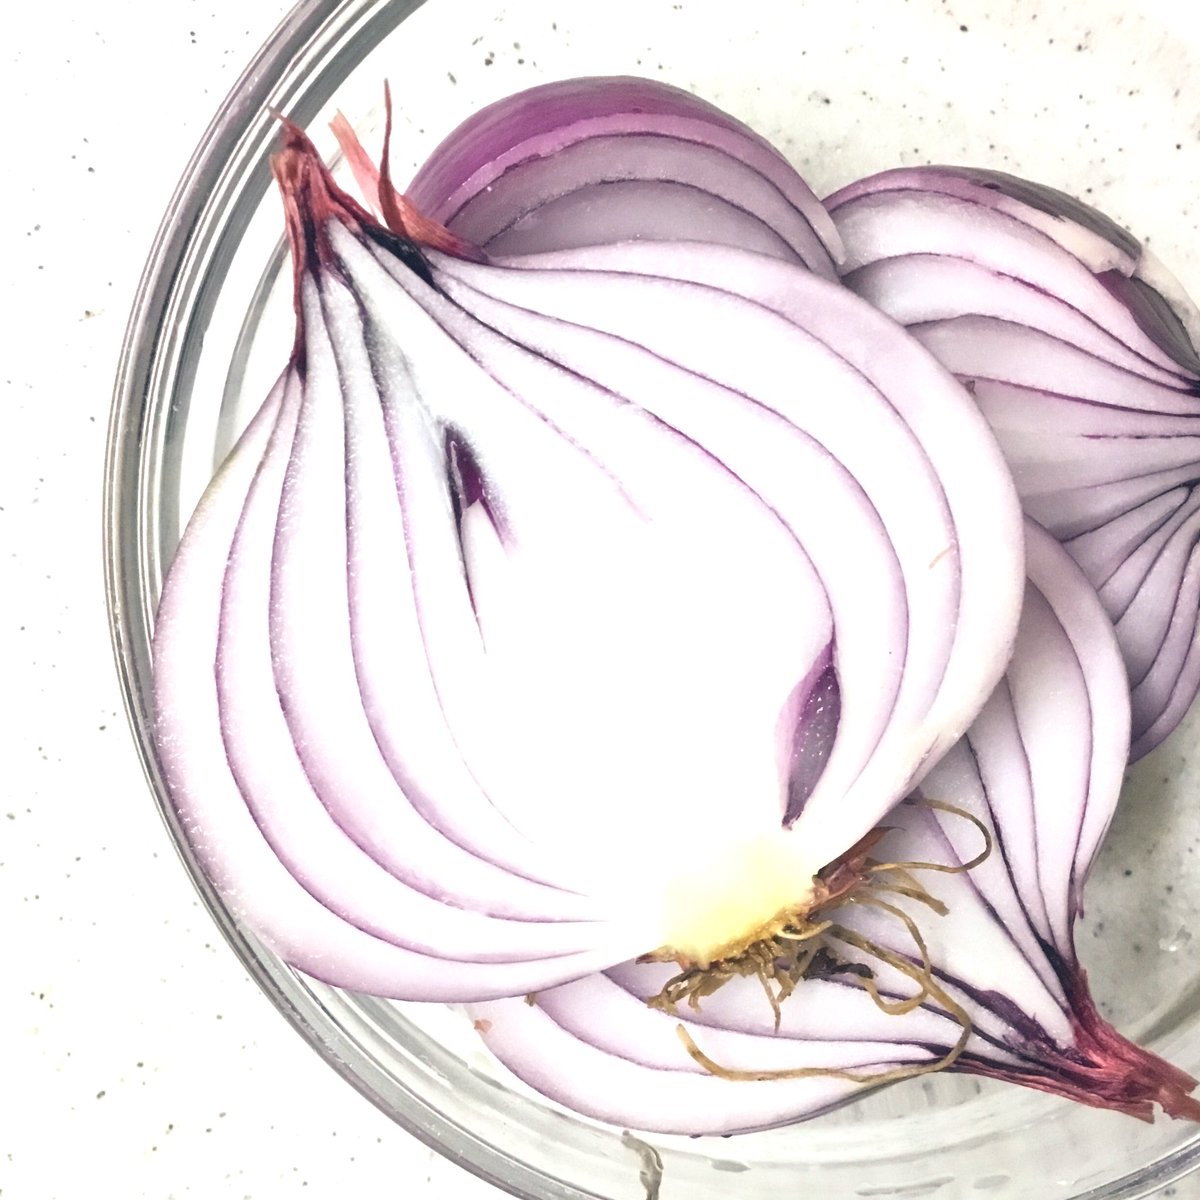 Natura 紫キャベツの即席ザワークラウト 紫玉ねぎの塩ピクルスを仕込みました ピクルスは1日置くと全体が紫色になります Naturagohan 紫キャベツ 紫玉ねぎ ザワークラウト ピクルス 無農薬野菜